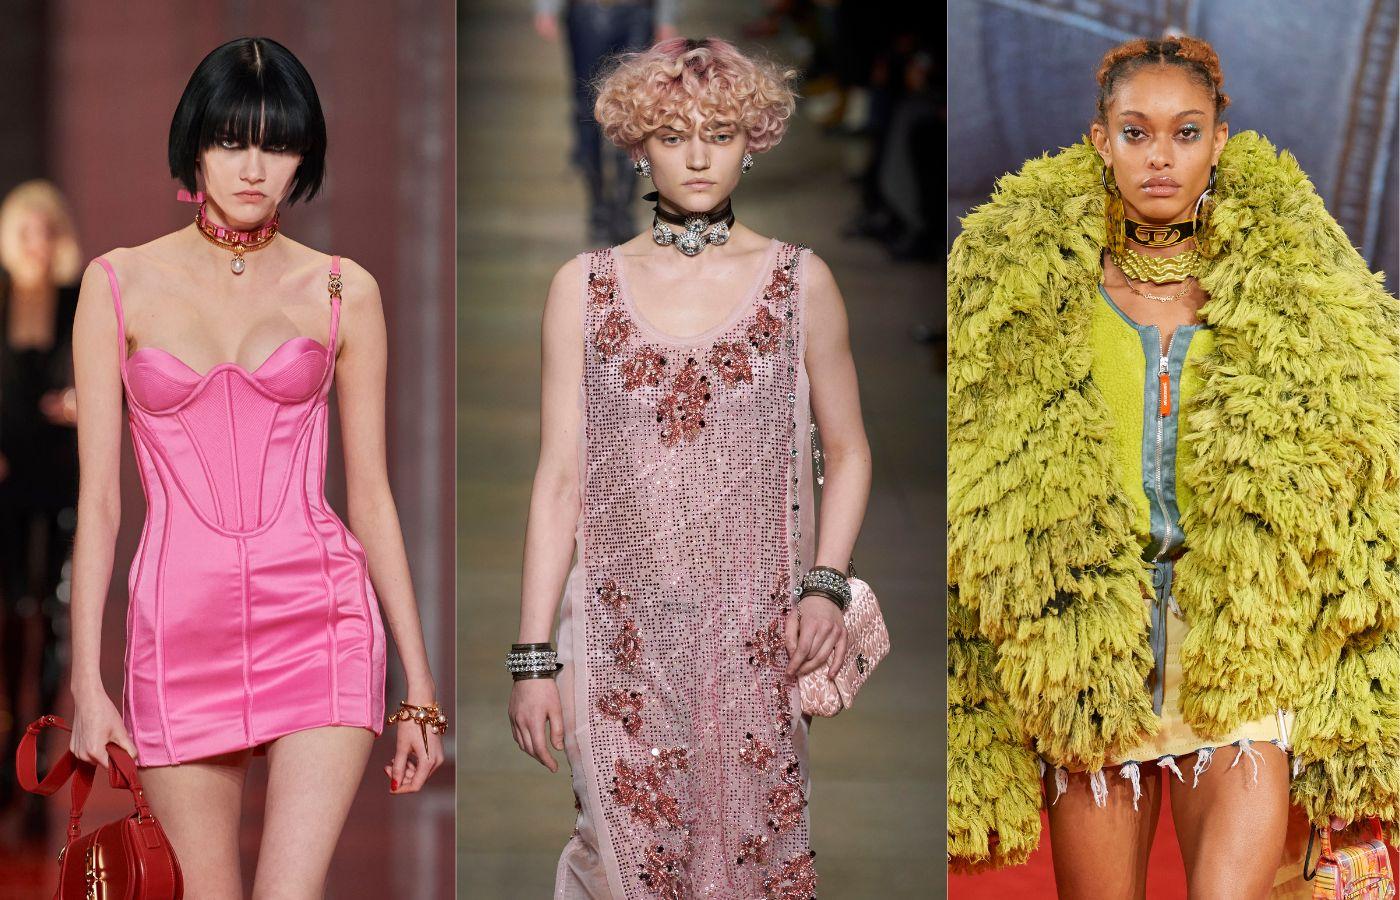 Pokazy na jesień–zimę 2022, od lewej: Versace, Miu Miu, Diesel (Fot. Spotlight)